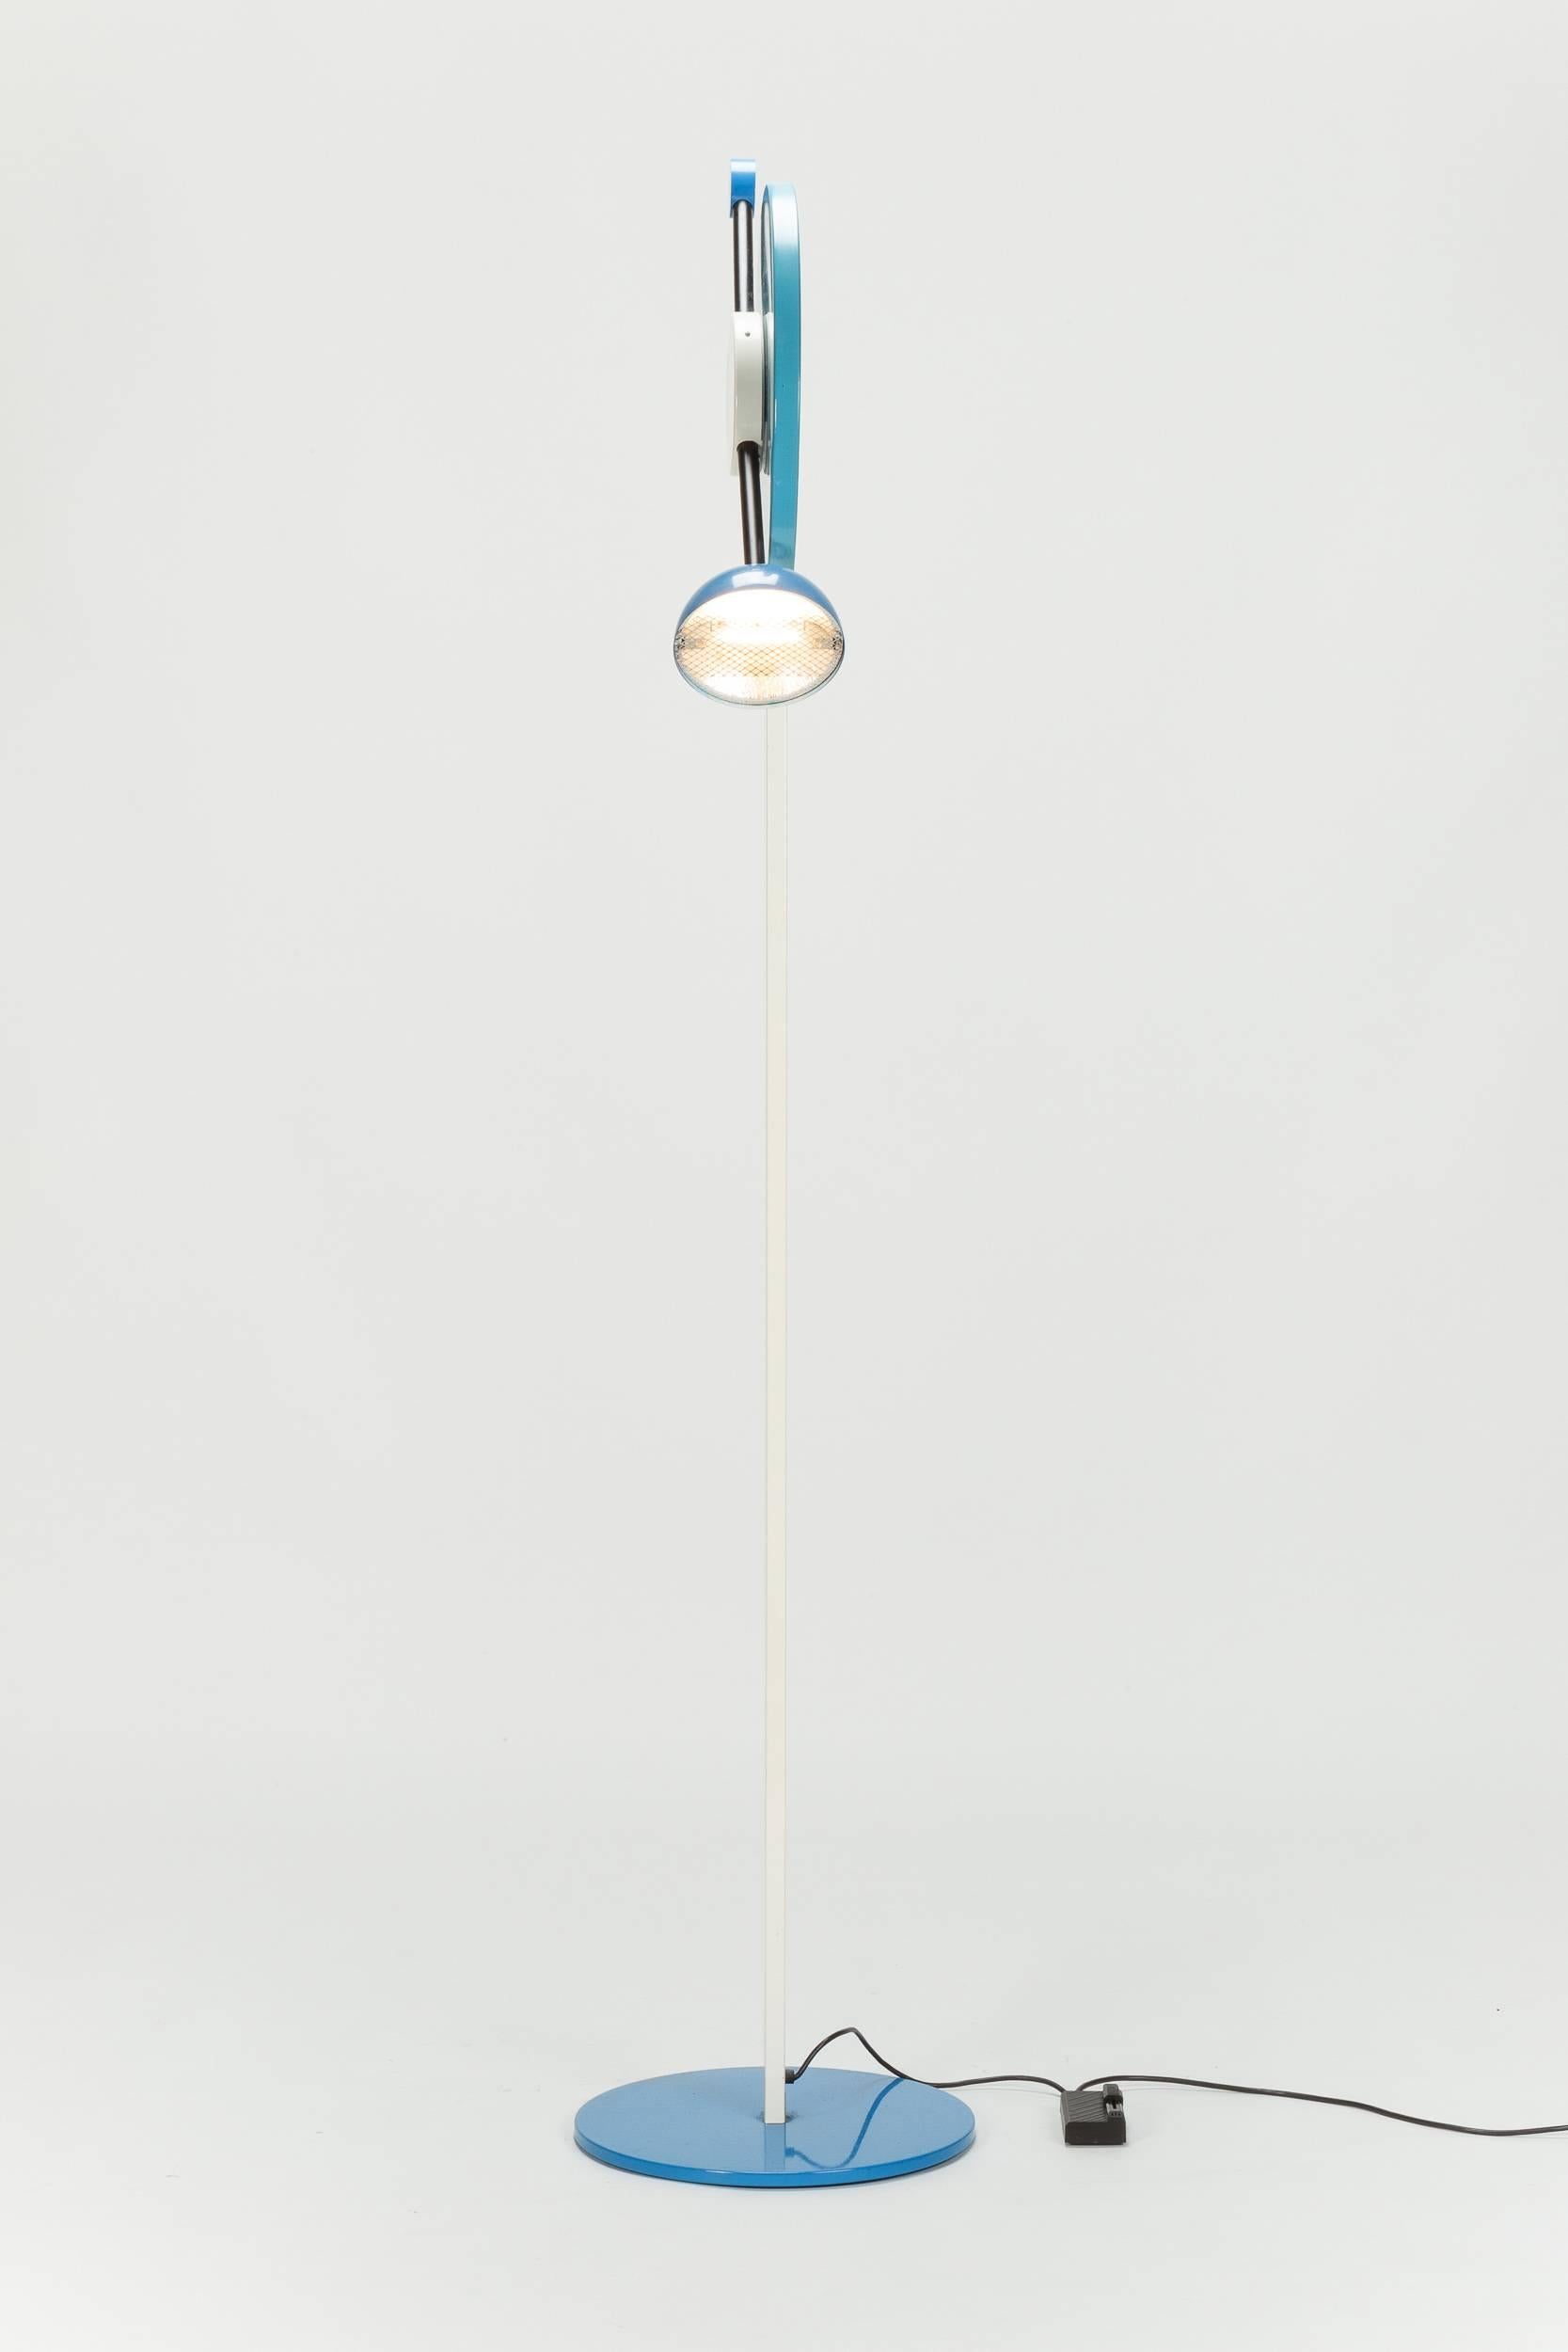 Italian Martine Bedin Floor Lamp Charleston Memphis Milano, 1984